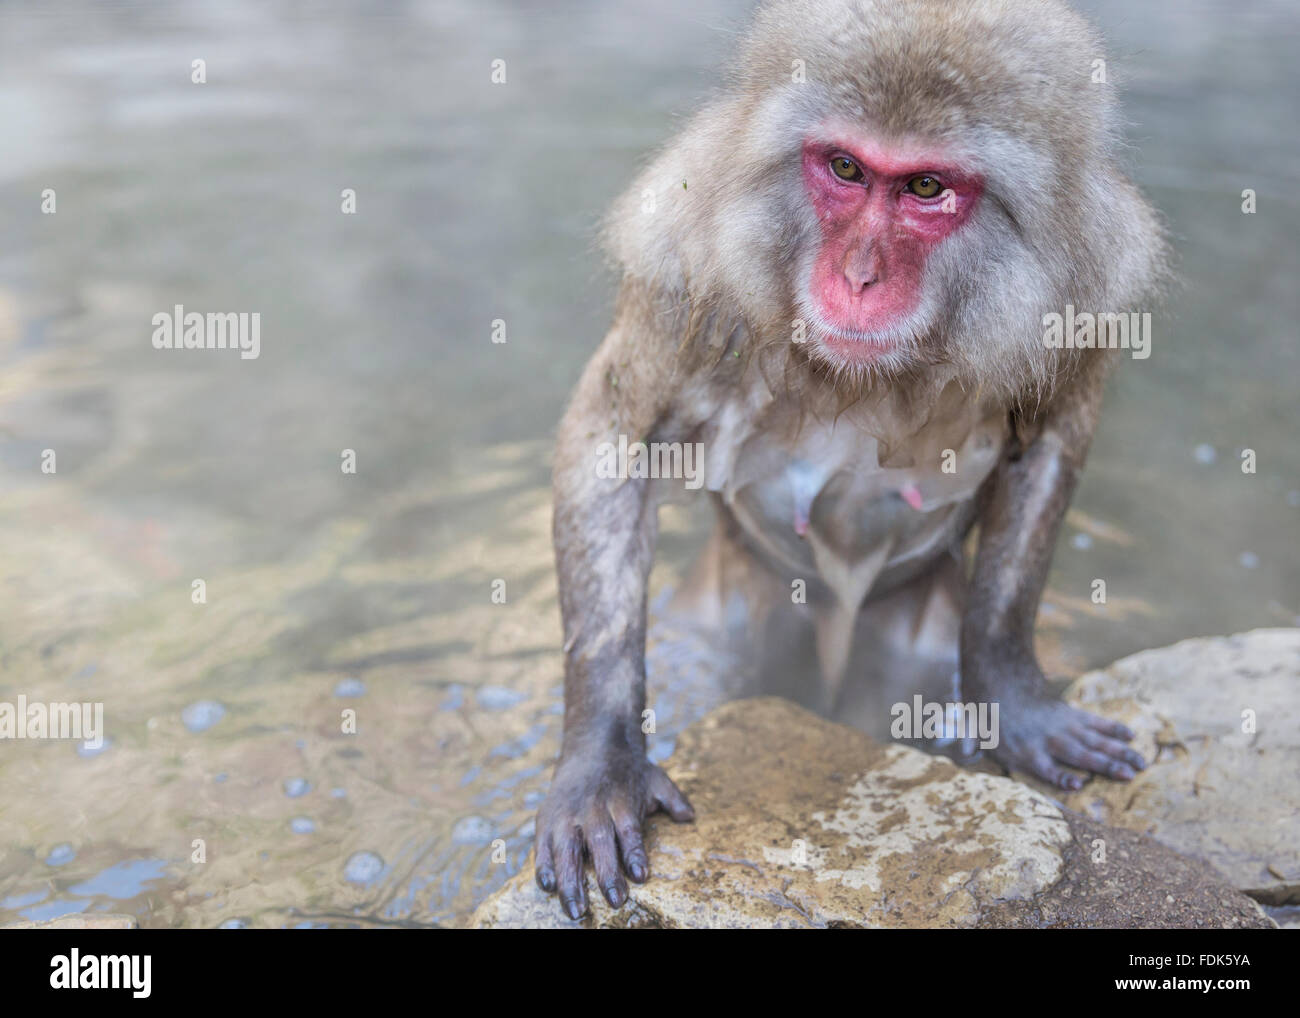 Snow monkey getting out of hot spring, Nagano, Honshu, Japan Stock Photo